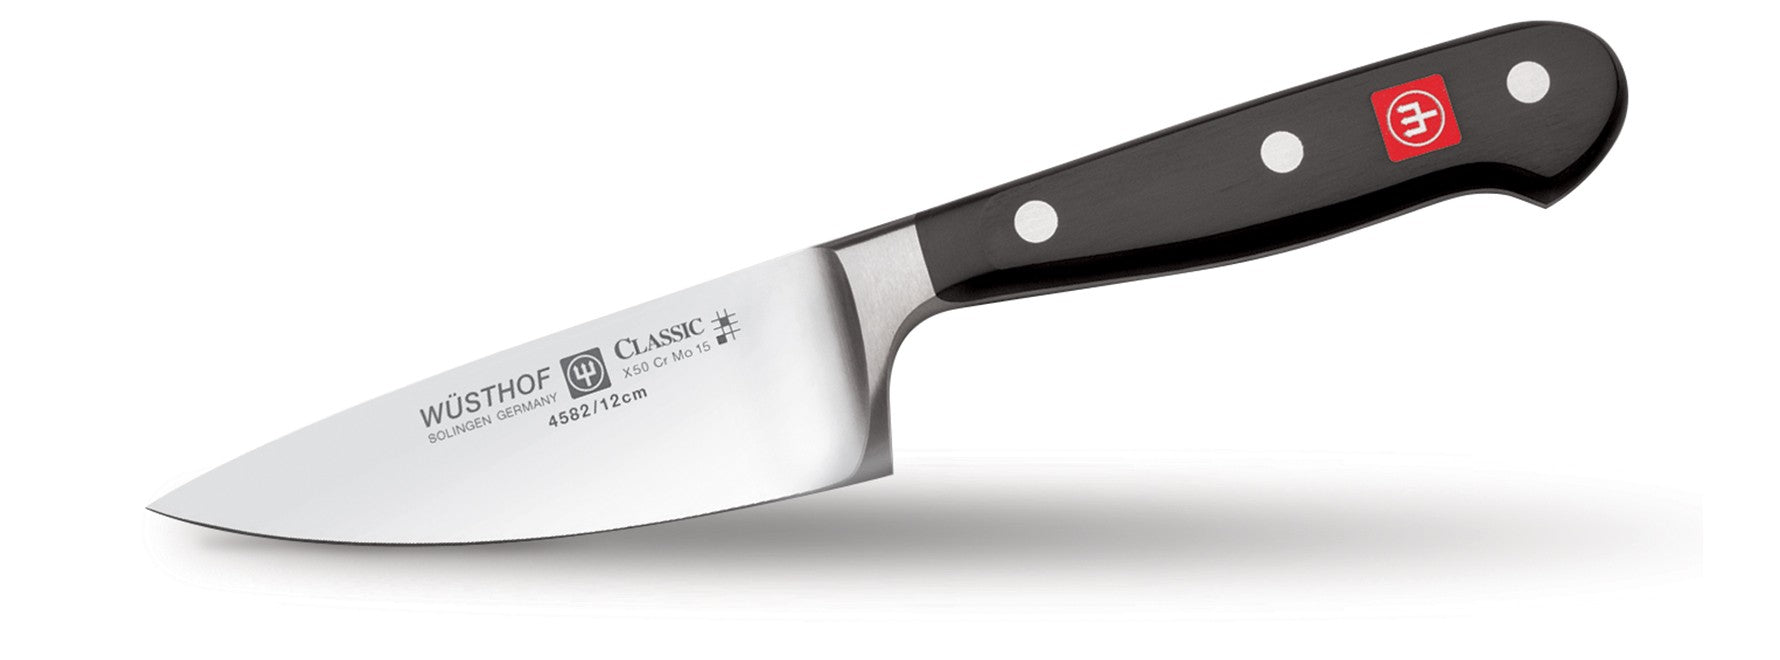 Wüsthof Classic Cook's Knife 4.5"